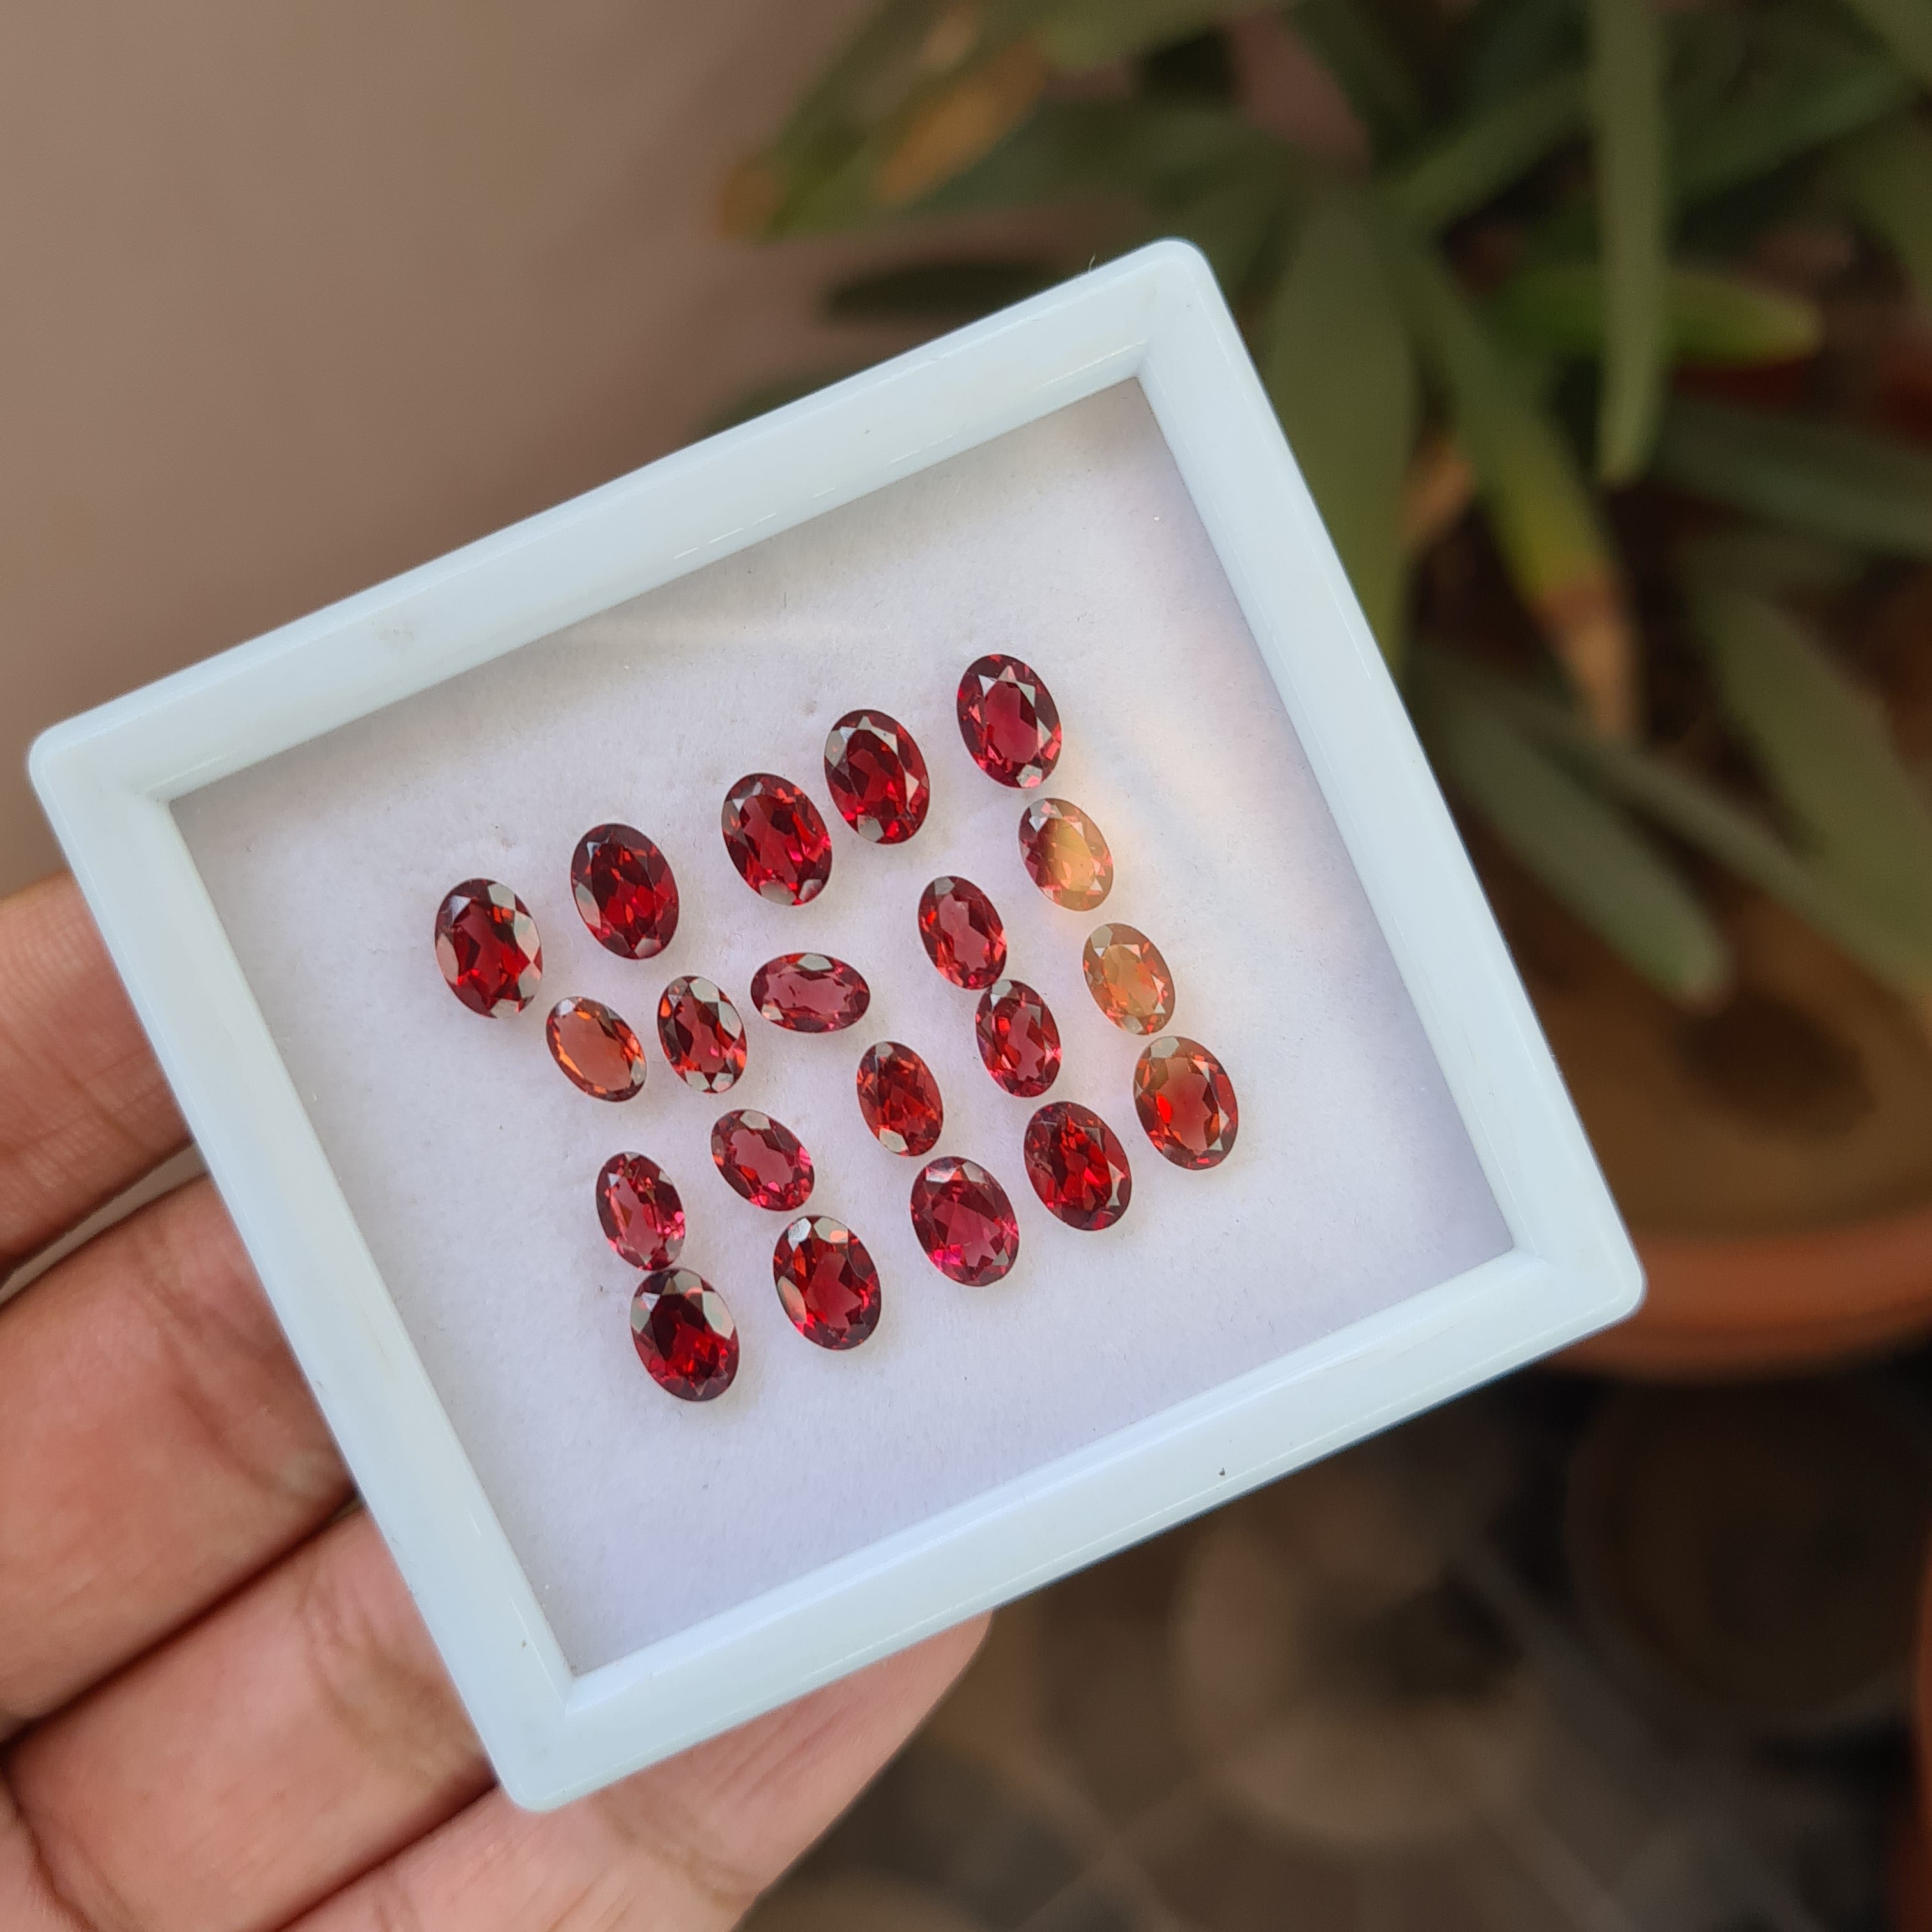 20 Pieces Natural Garnet Faceted Gemstones Oval Shape , Size: 6-7mm - The LabradoriteKing